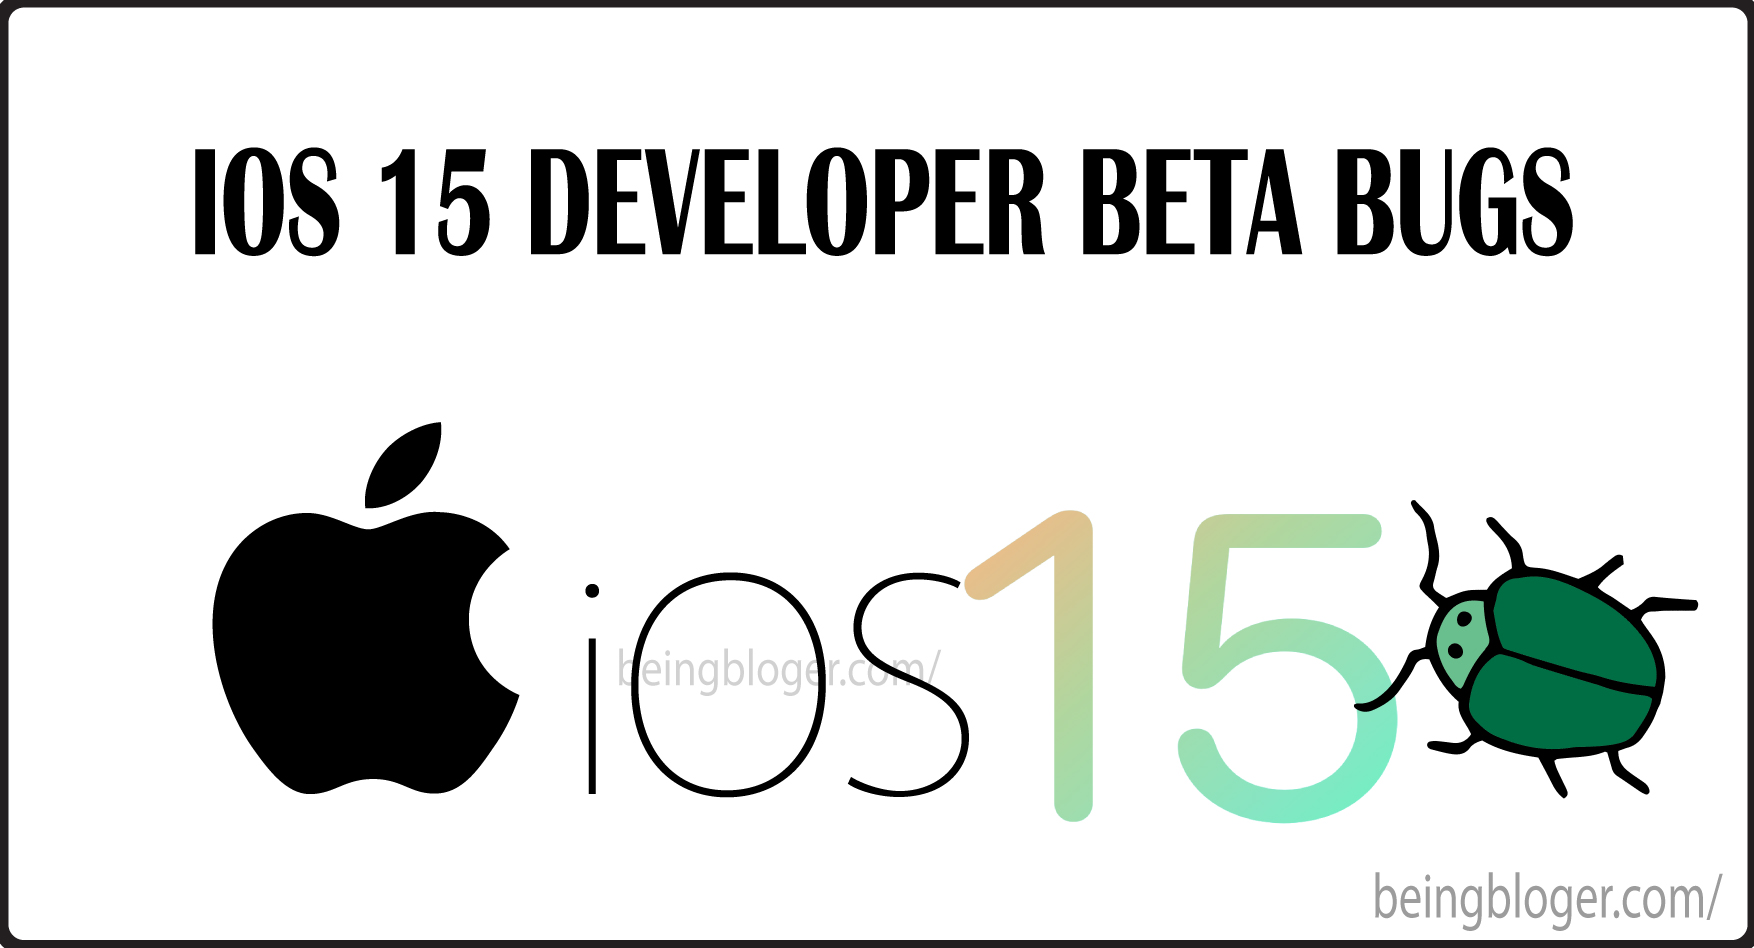 iOS 15 developer beta bugs